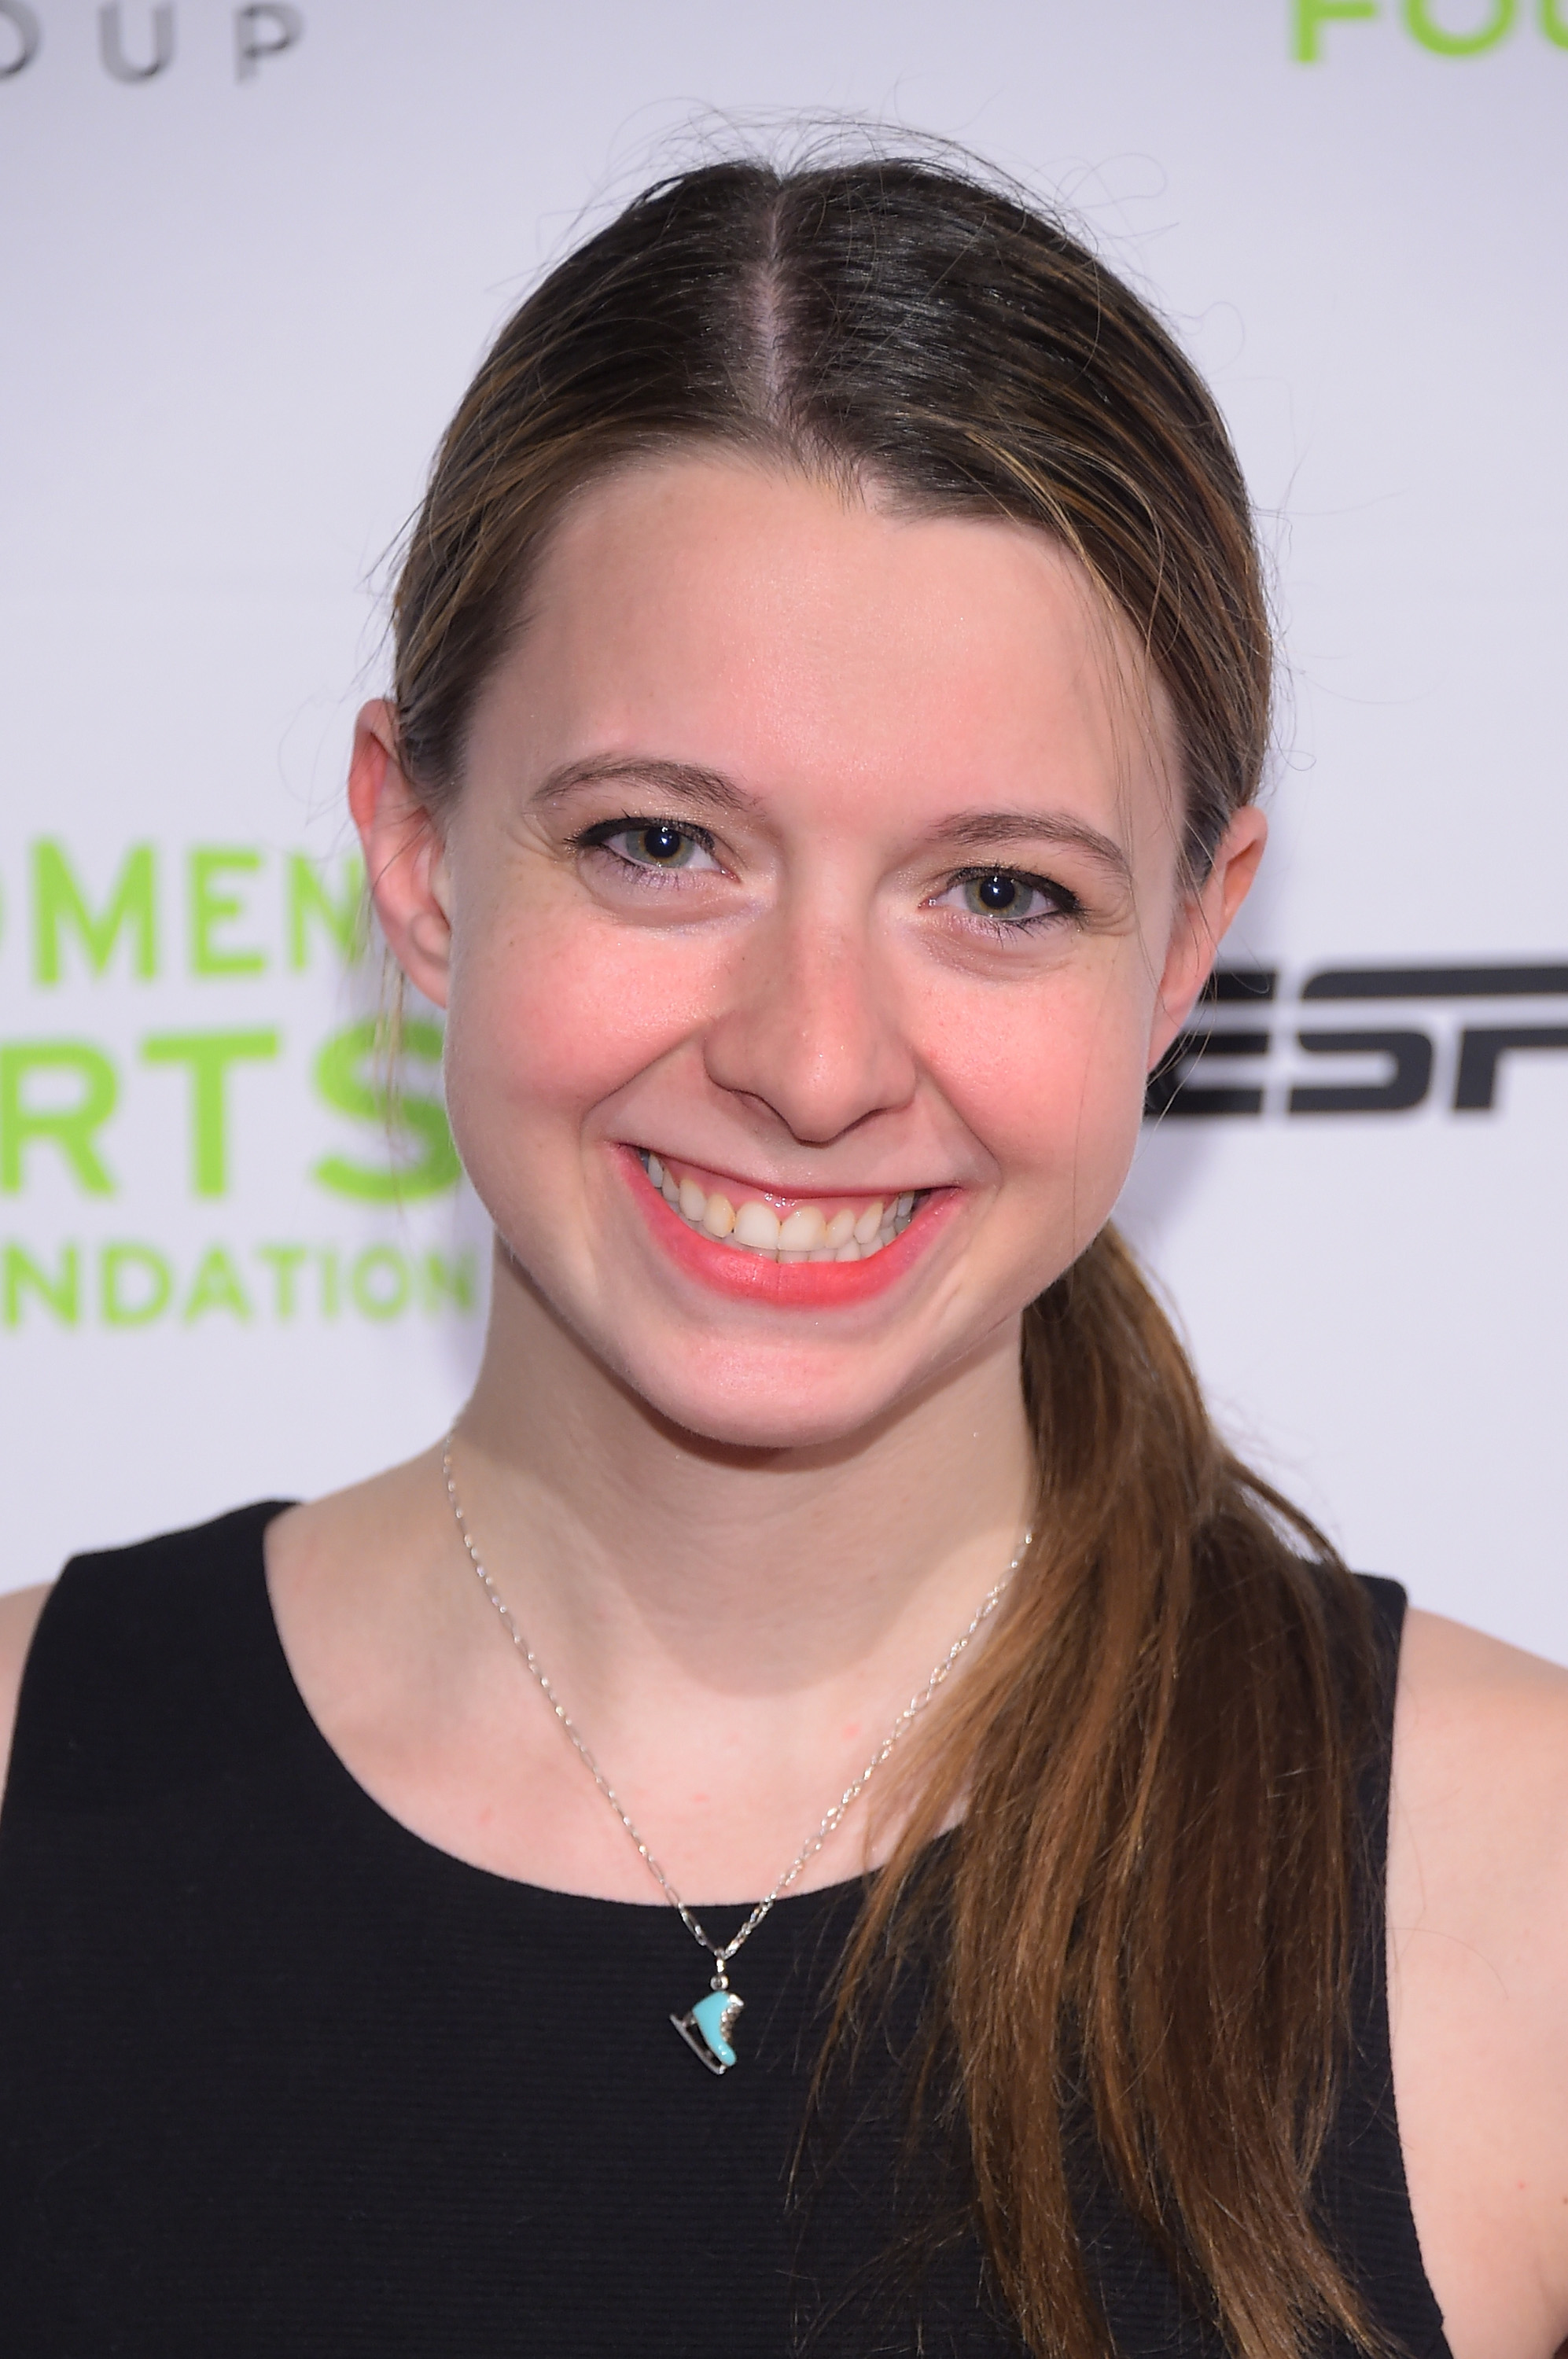 Figure Skater Emily Hughes attends the Womens Sports Foundations 35th Annual Salute to Women In Sports awards on Oct. 15, 2014 in New York City.